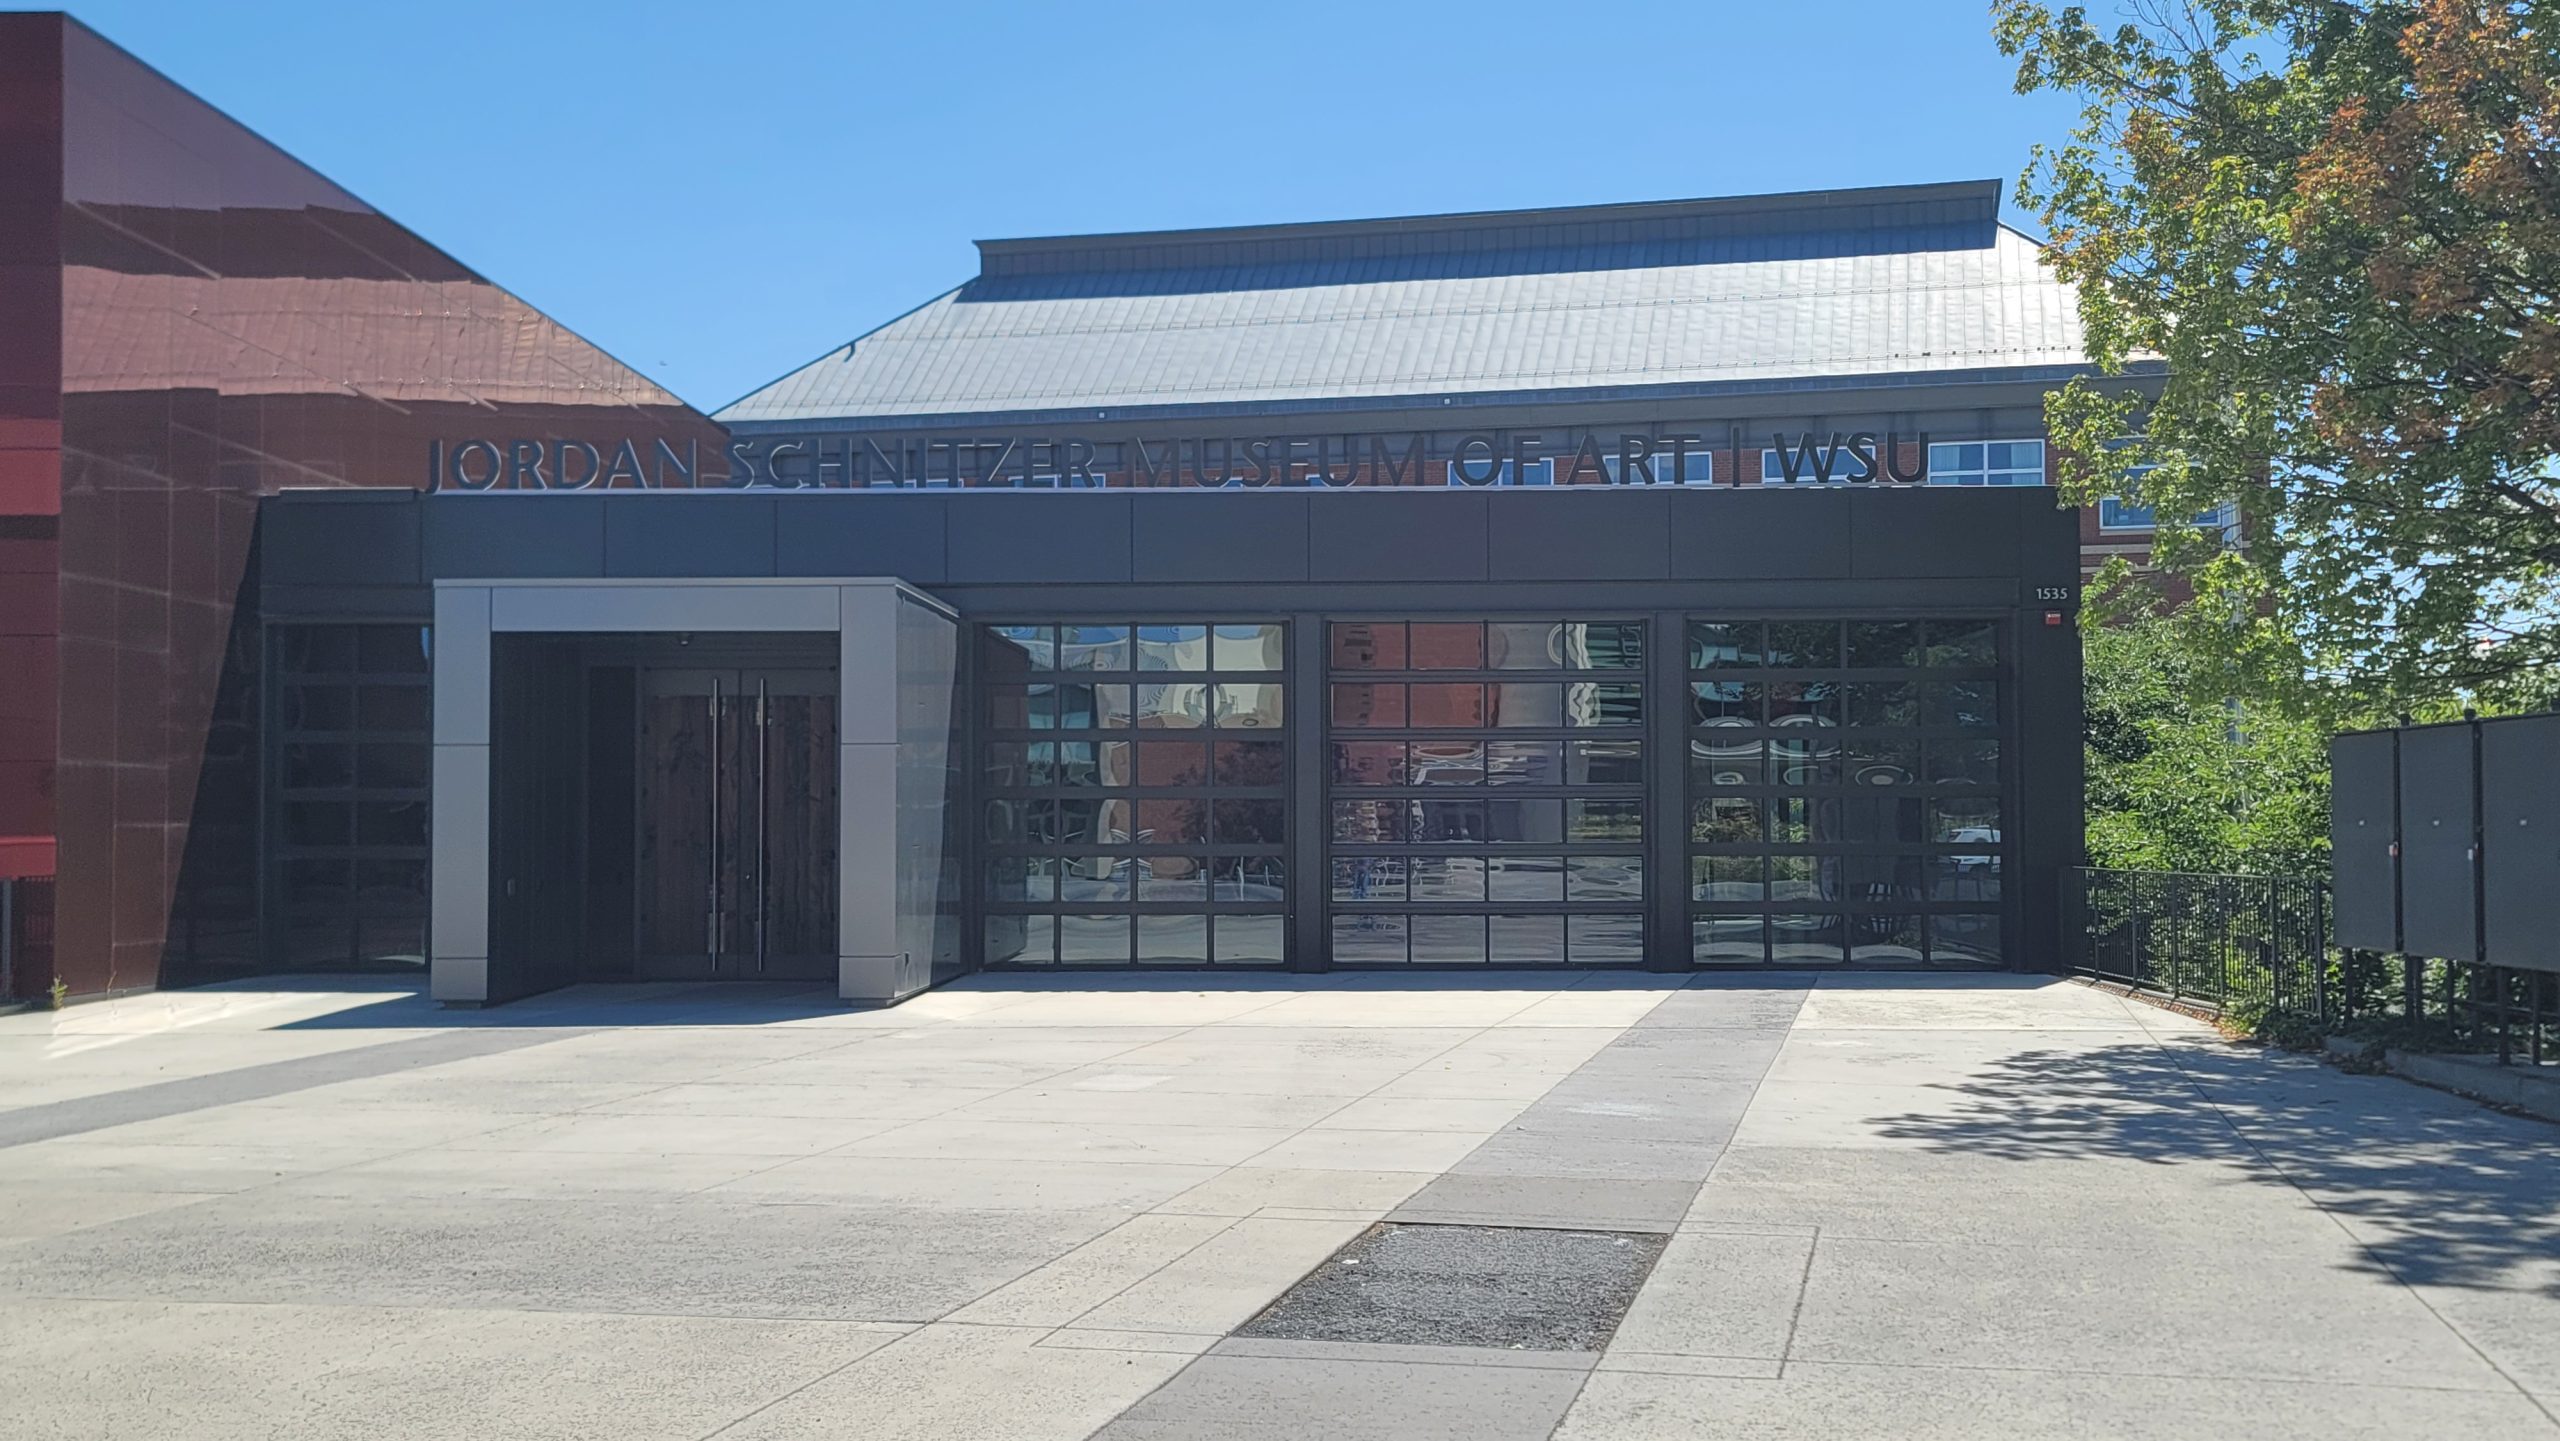 Exterior of the Jordan Schnitzer Museum of Art at WSU in Pullman Washington